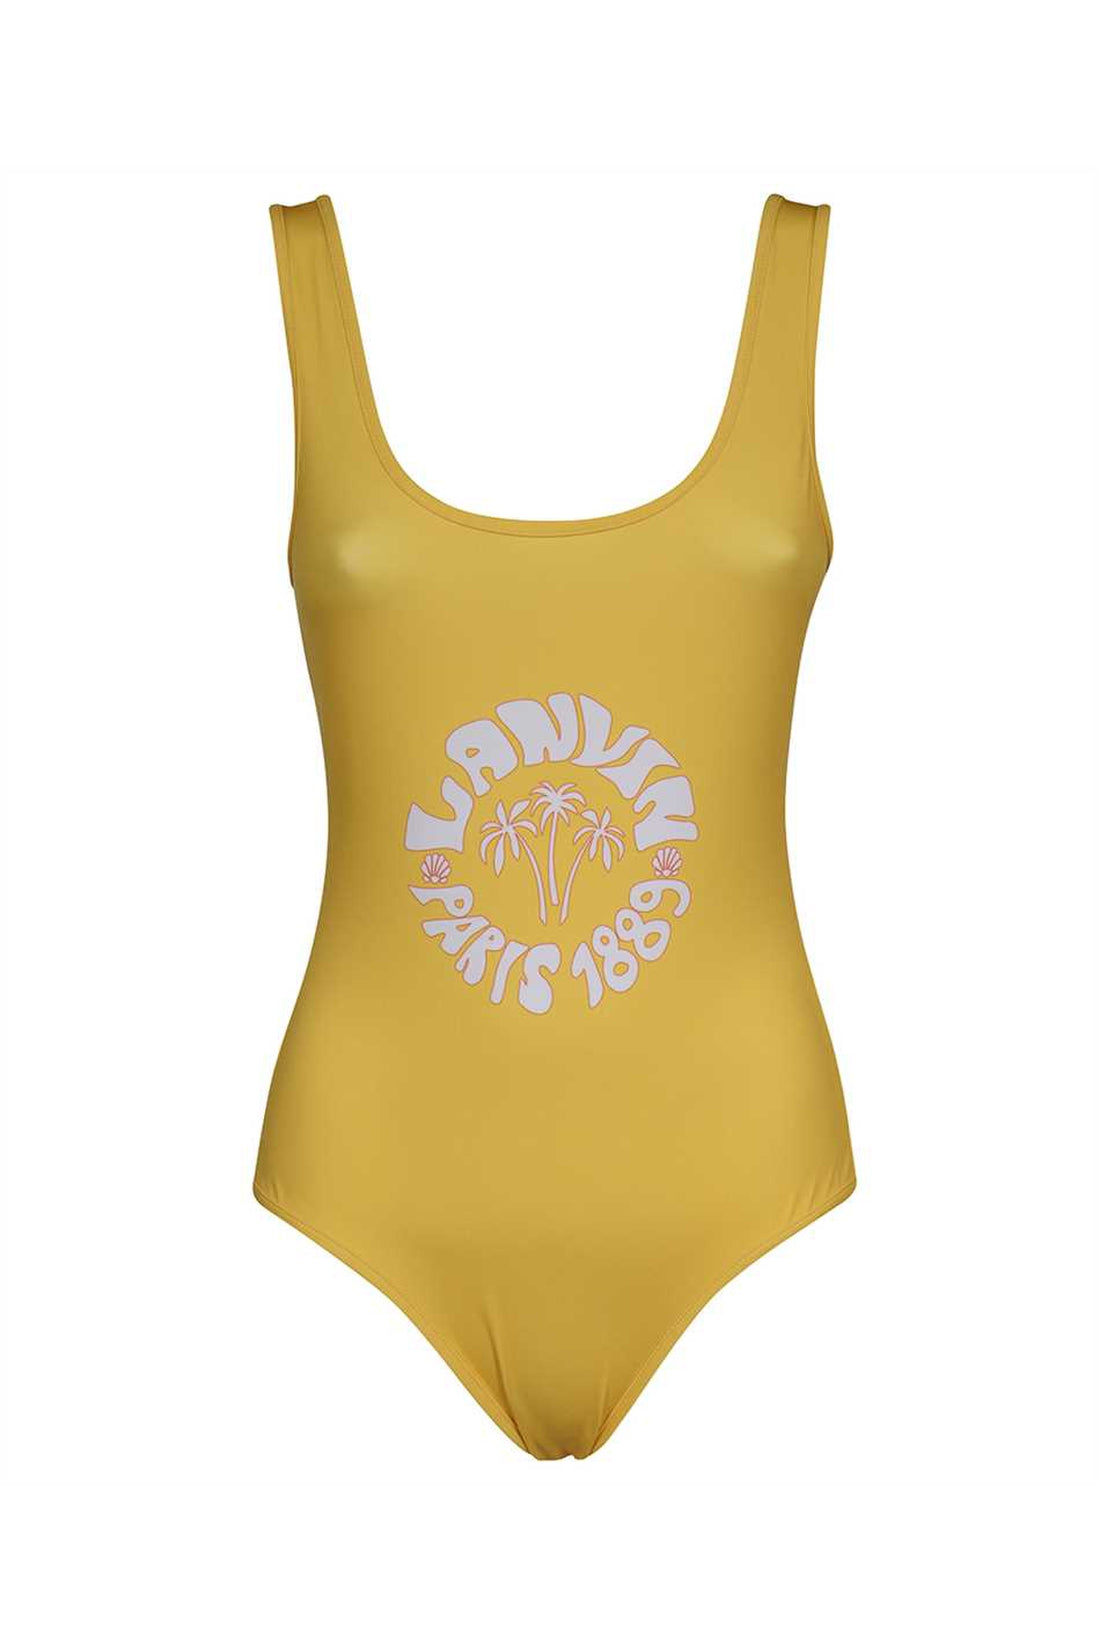 Lanvin-OUTLET-SALE-One-piece swimsuit with logo-ARCHIVIST